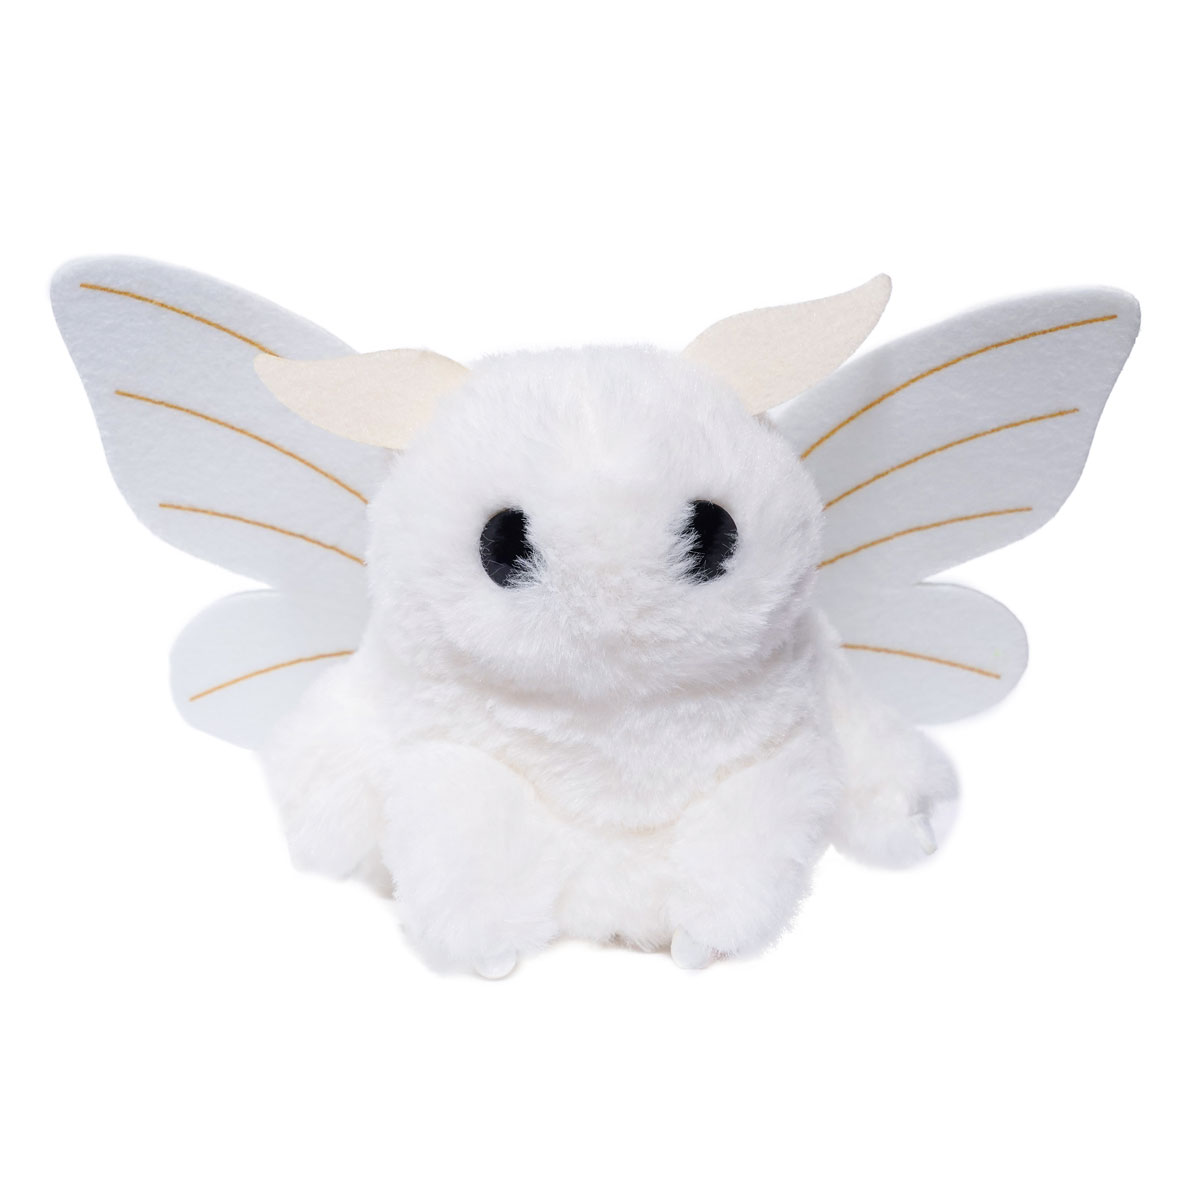 Poodle Moth Plush Toy Kawaii Stuffed Animal White Standard Size 5